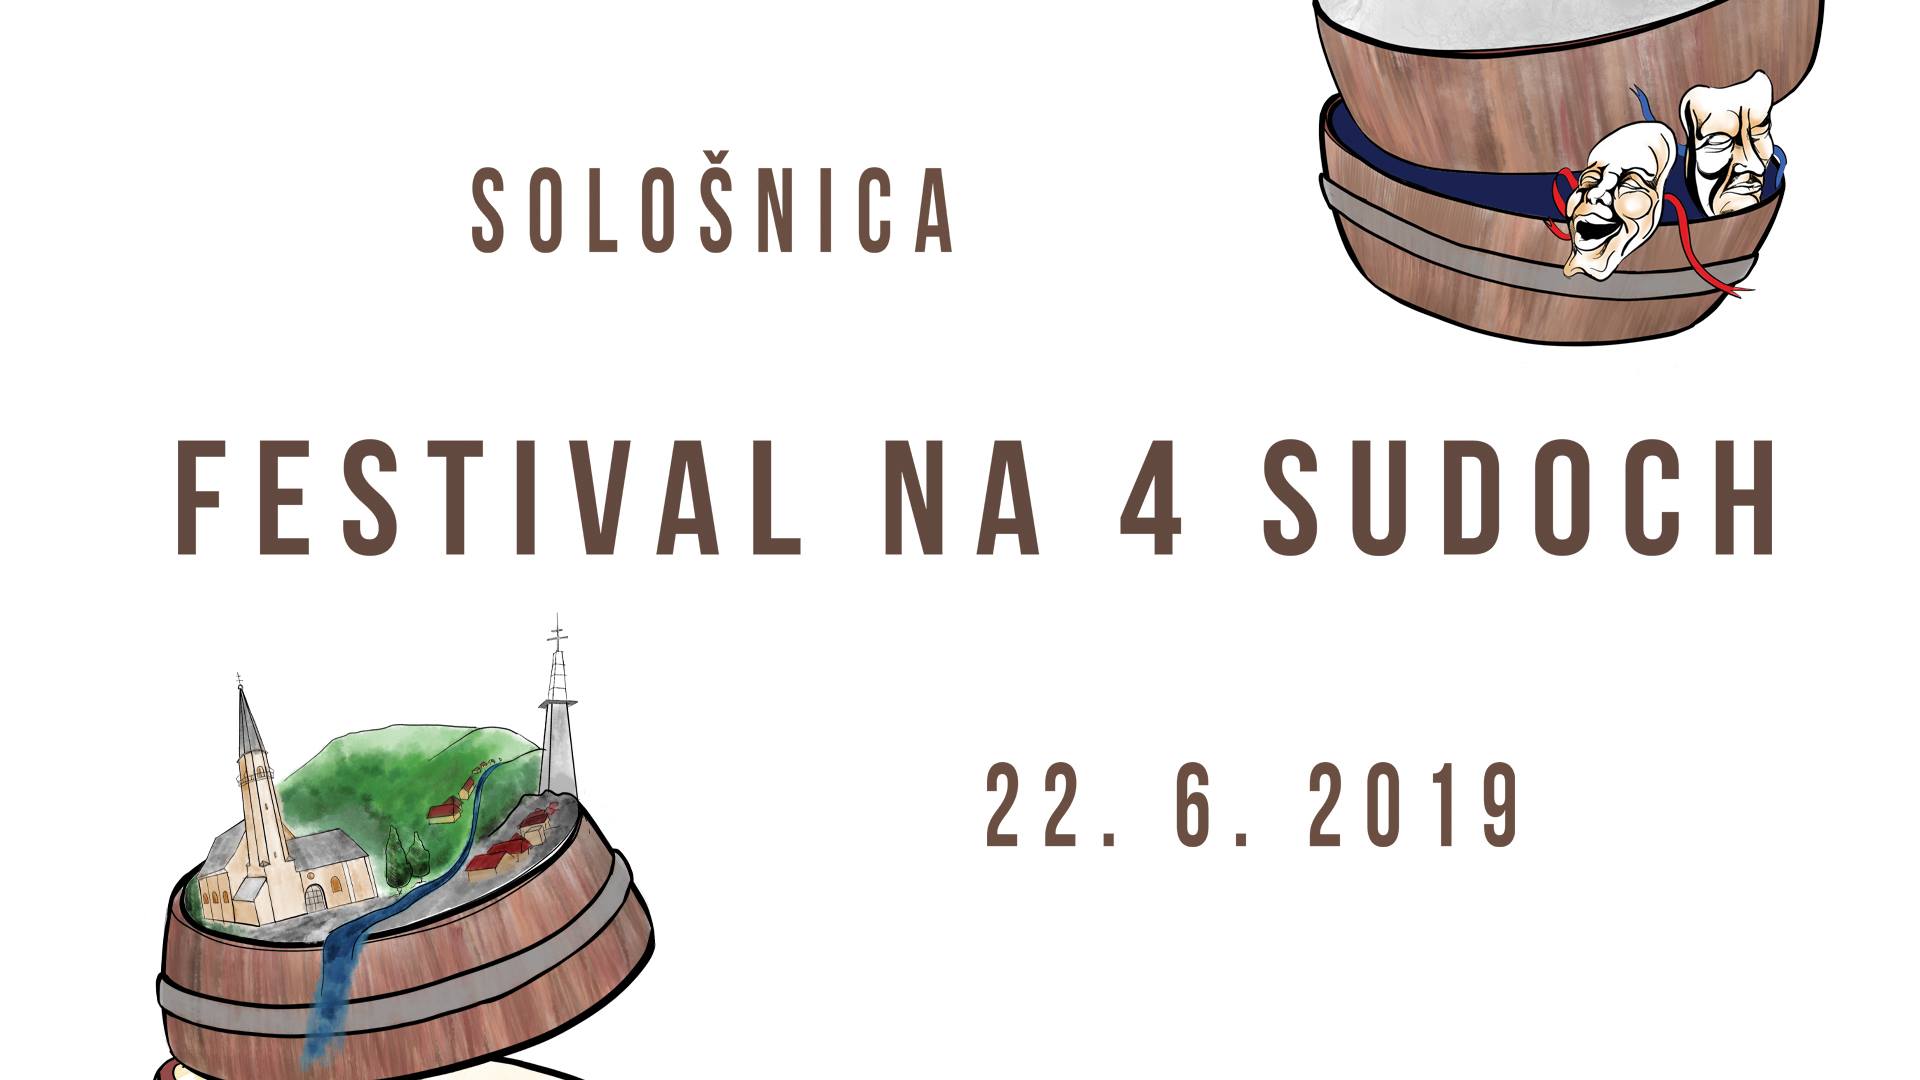 Festival na 4 sudoch Solonica 2019 - 100. vroie  zaloenia prvho ochotnckeho  sboru v Solonici